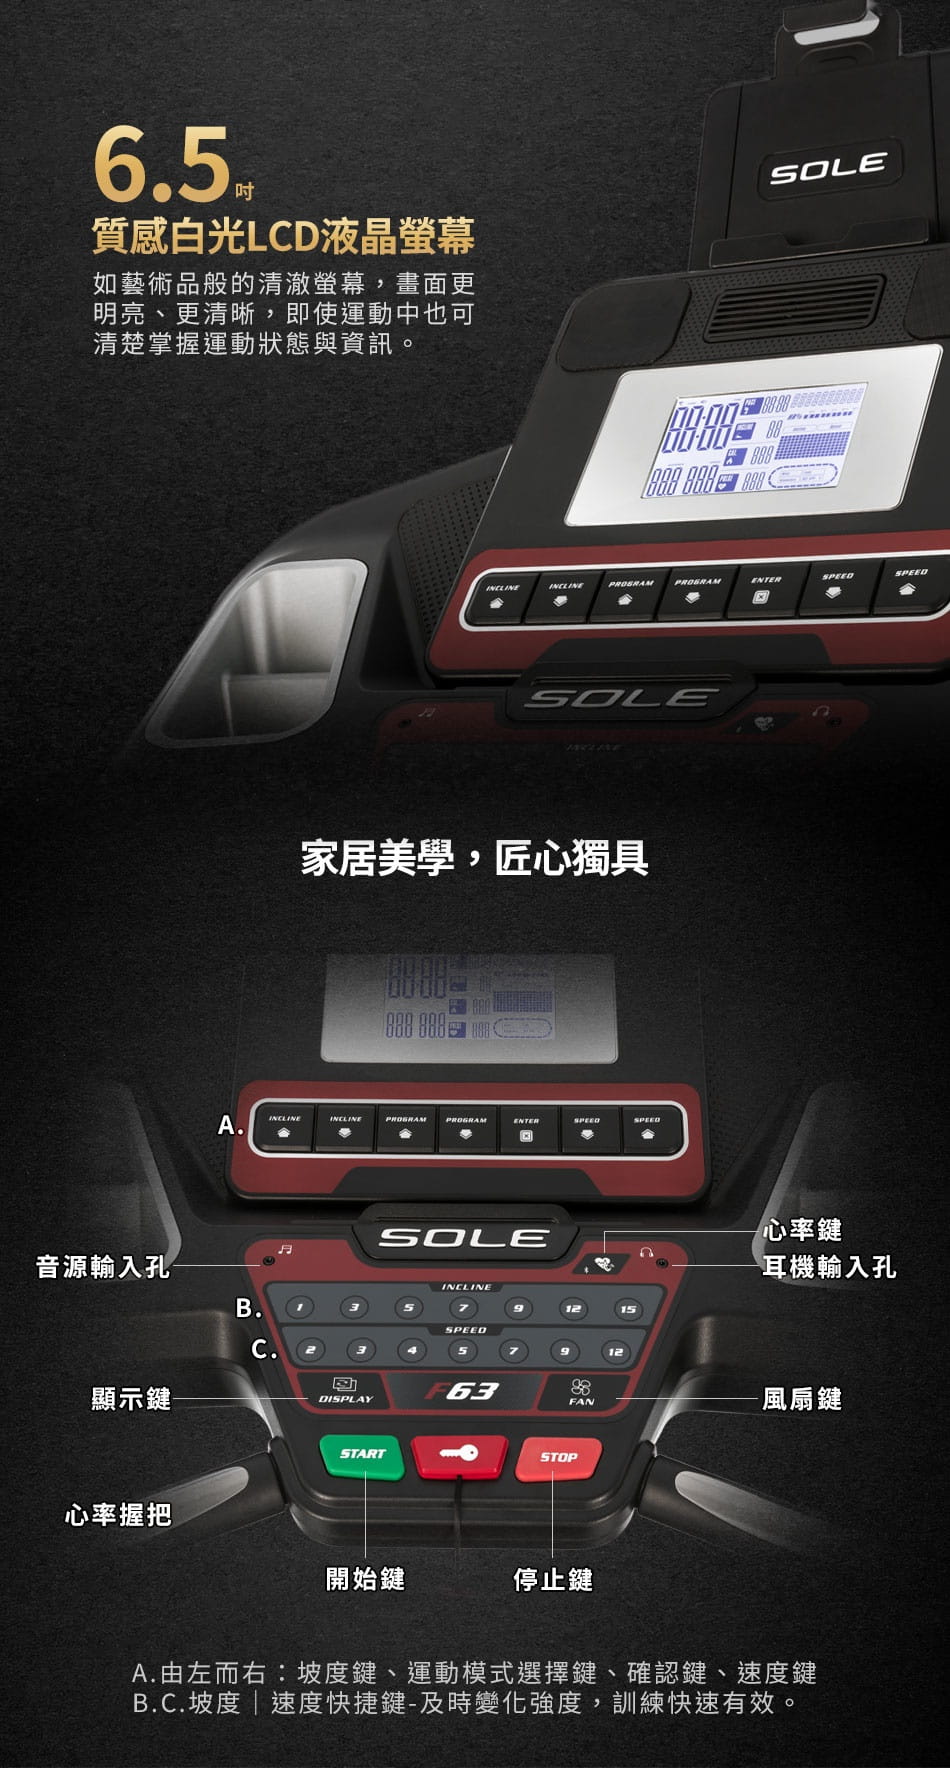 【DYACO】SOLE(索爾)F63跑步機 電動跑步機 岱宇國際Dyaco 2